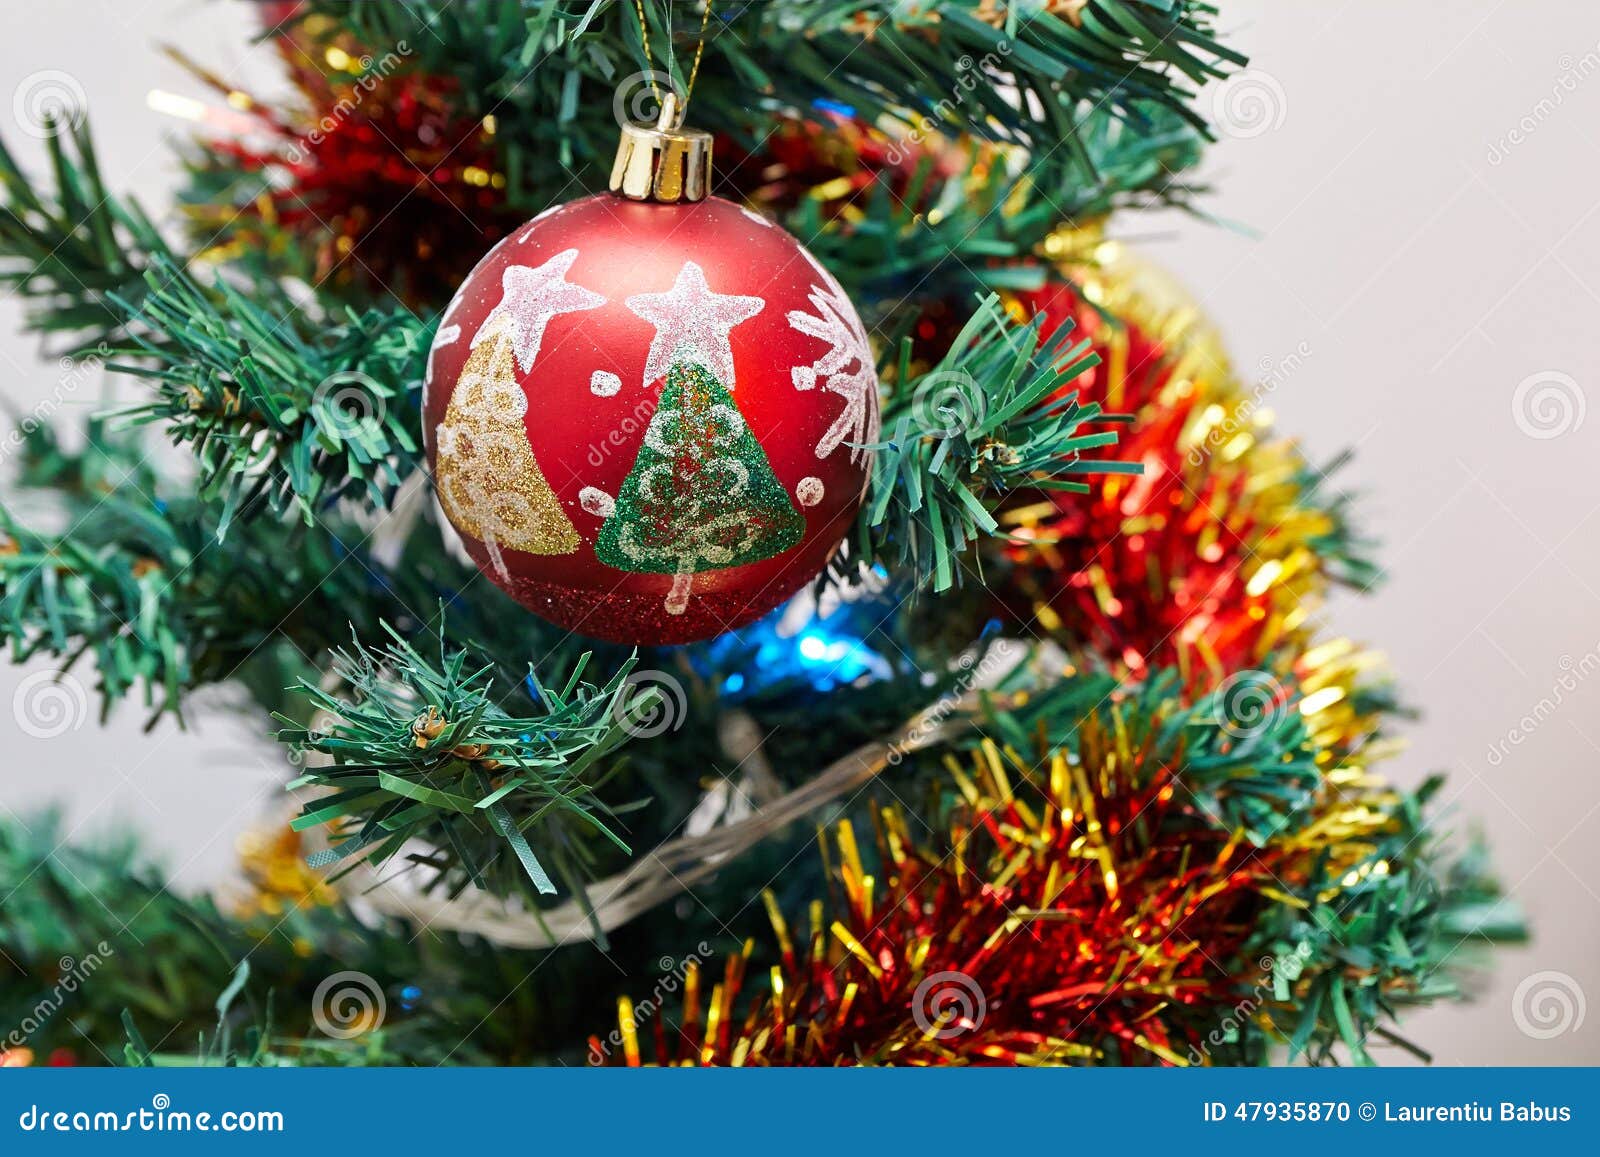 Christmas tree detail stock photo. Image of beautiful - 47935870